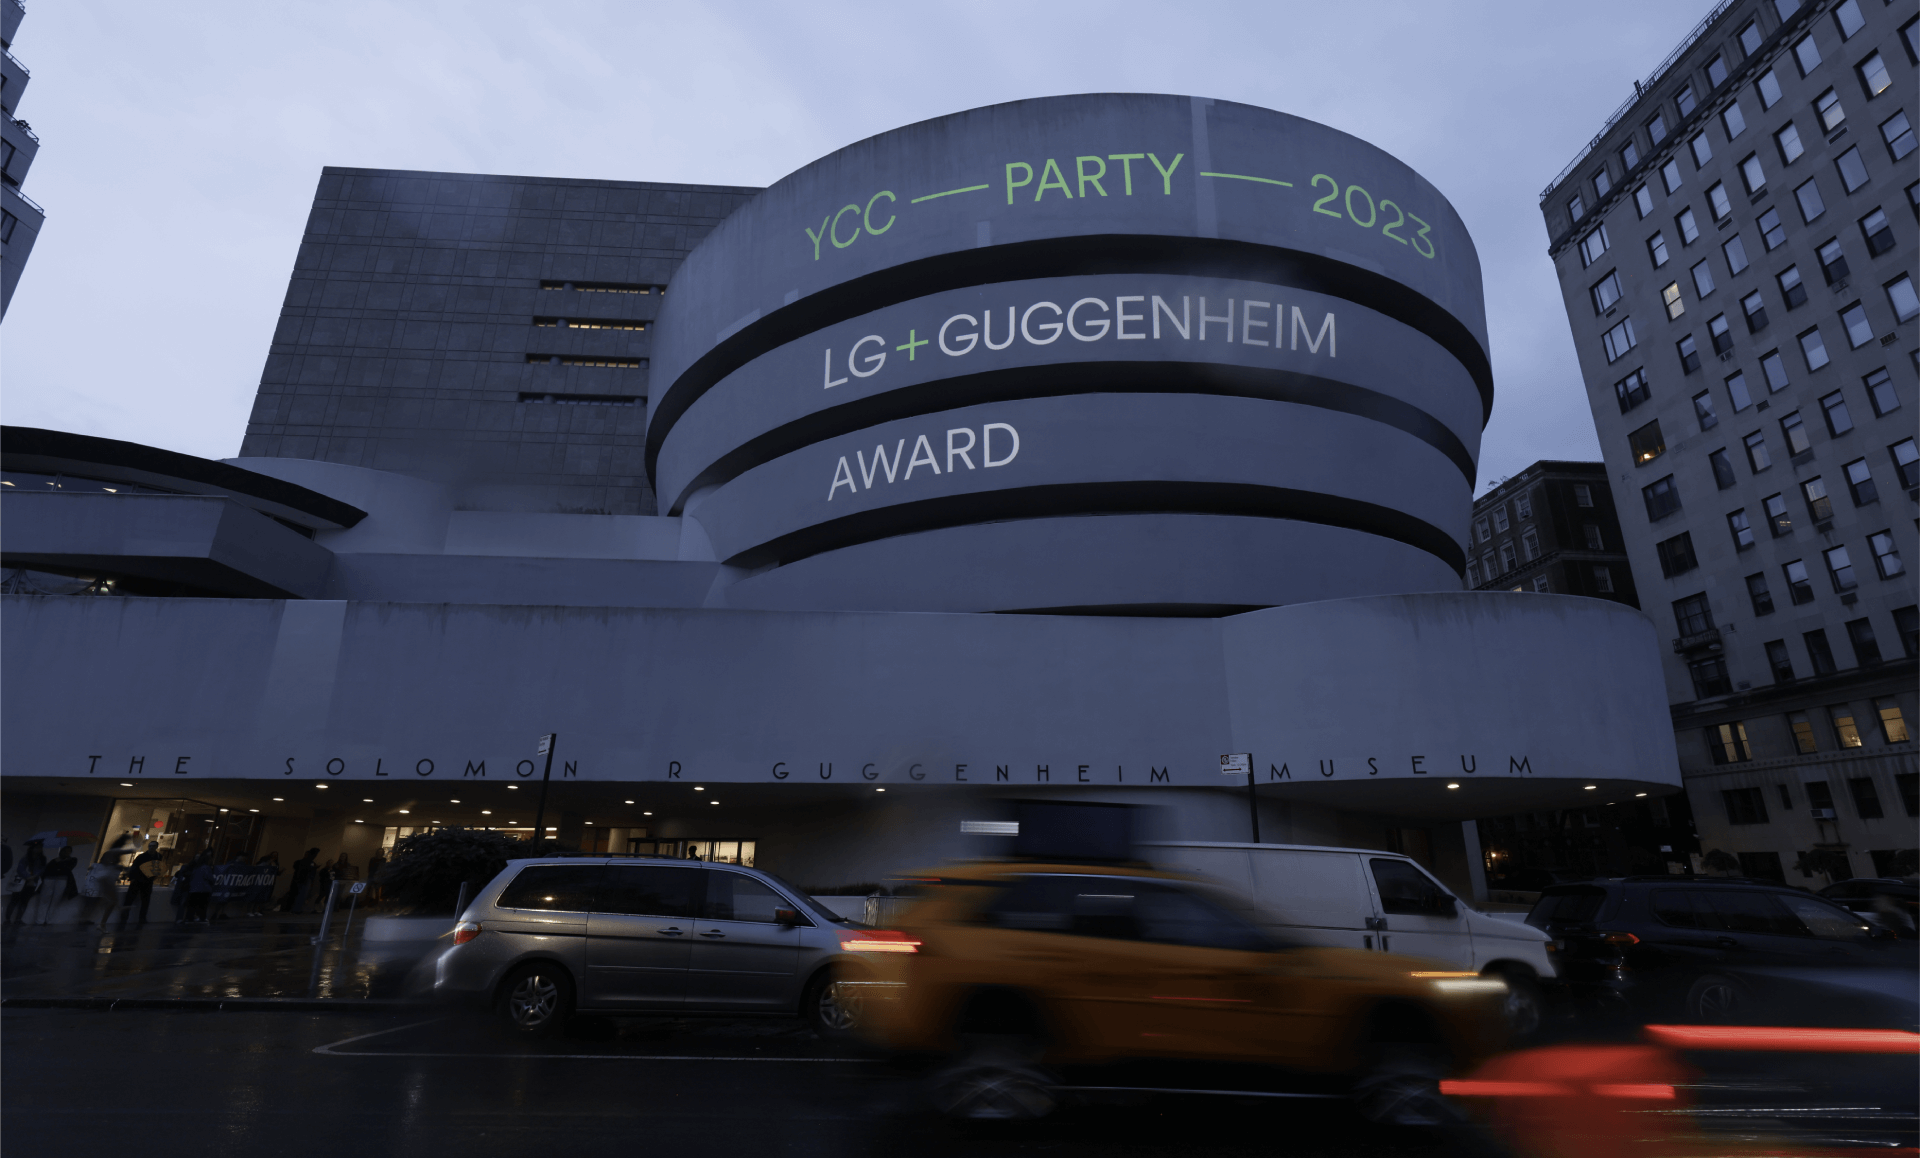 LG Guggenheim Global Partnership, exterior mapping.